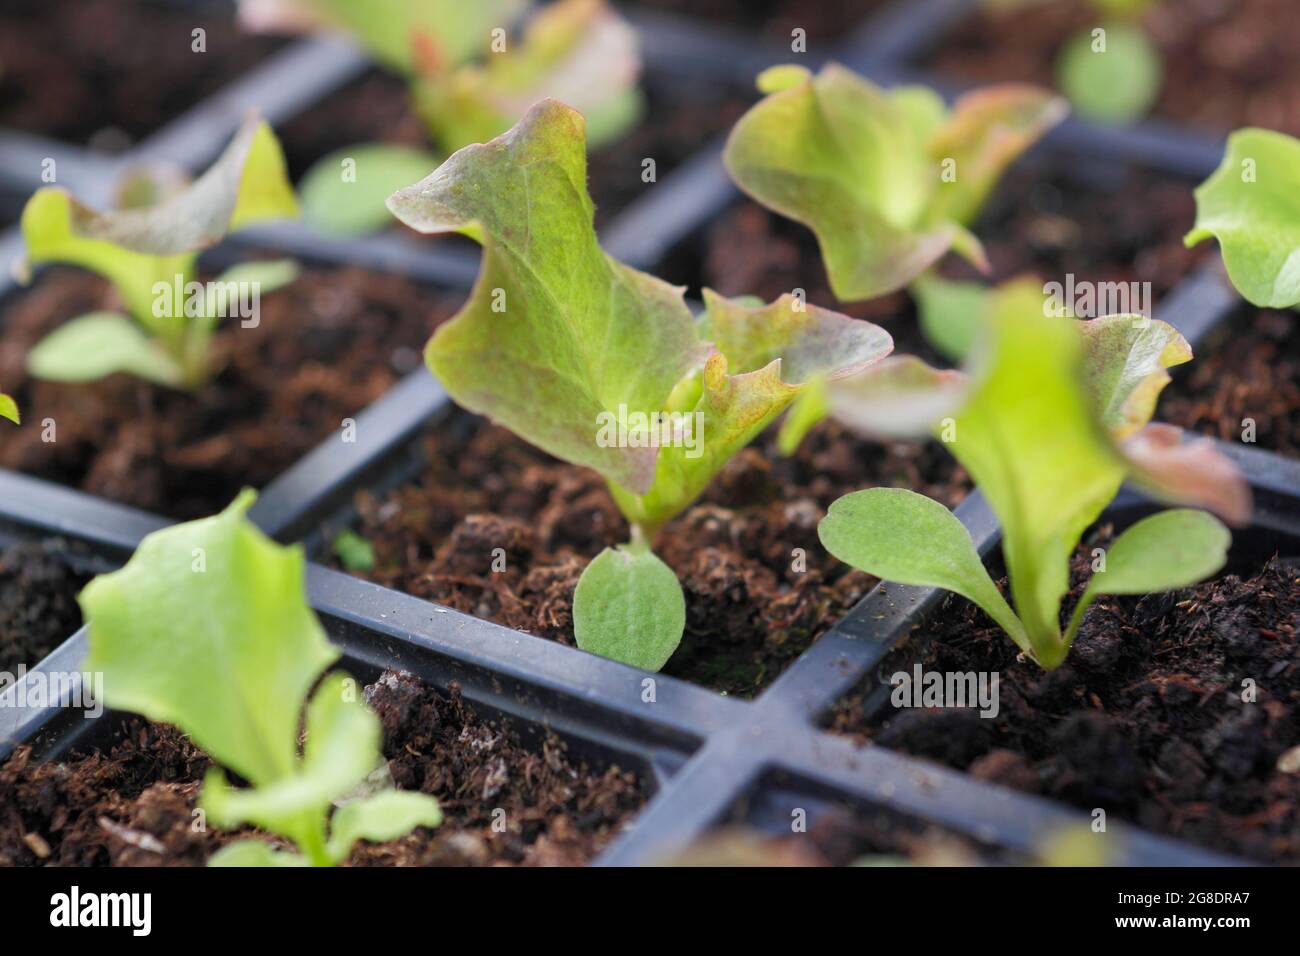 Salatpflanzen in einer modularen Schale - Lactuca sativa 'Lollo Rossa'. Stockfoto